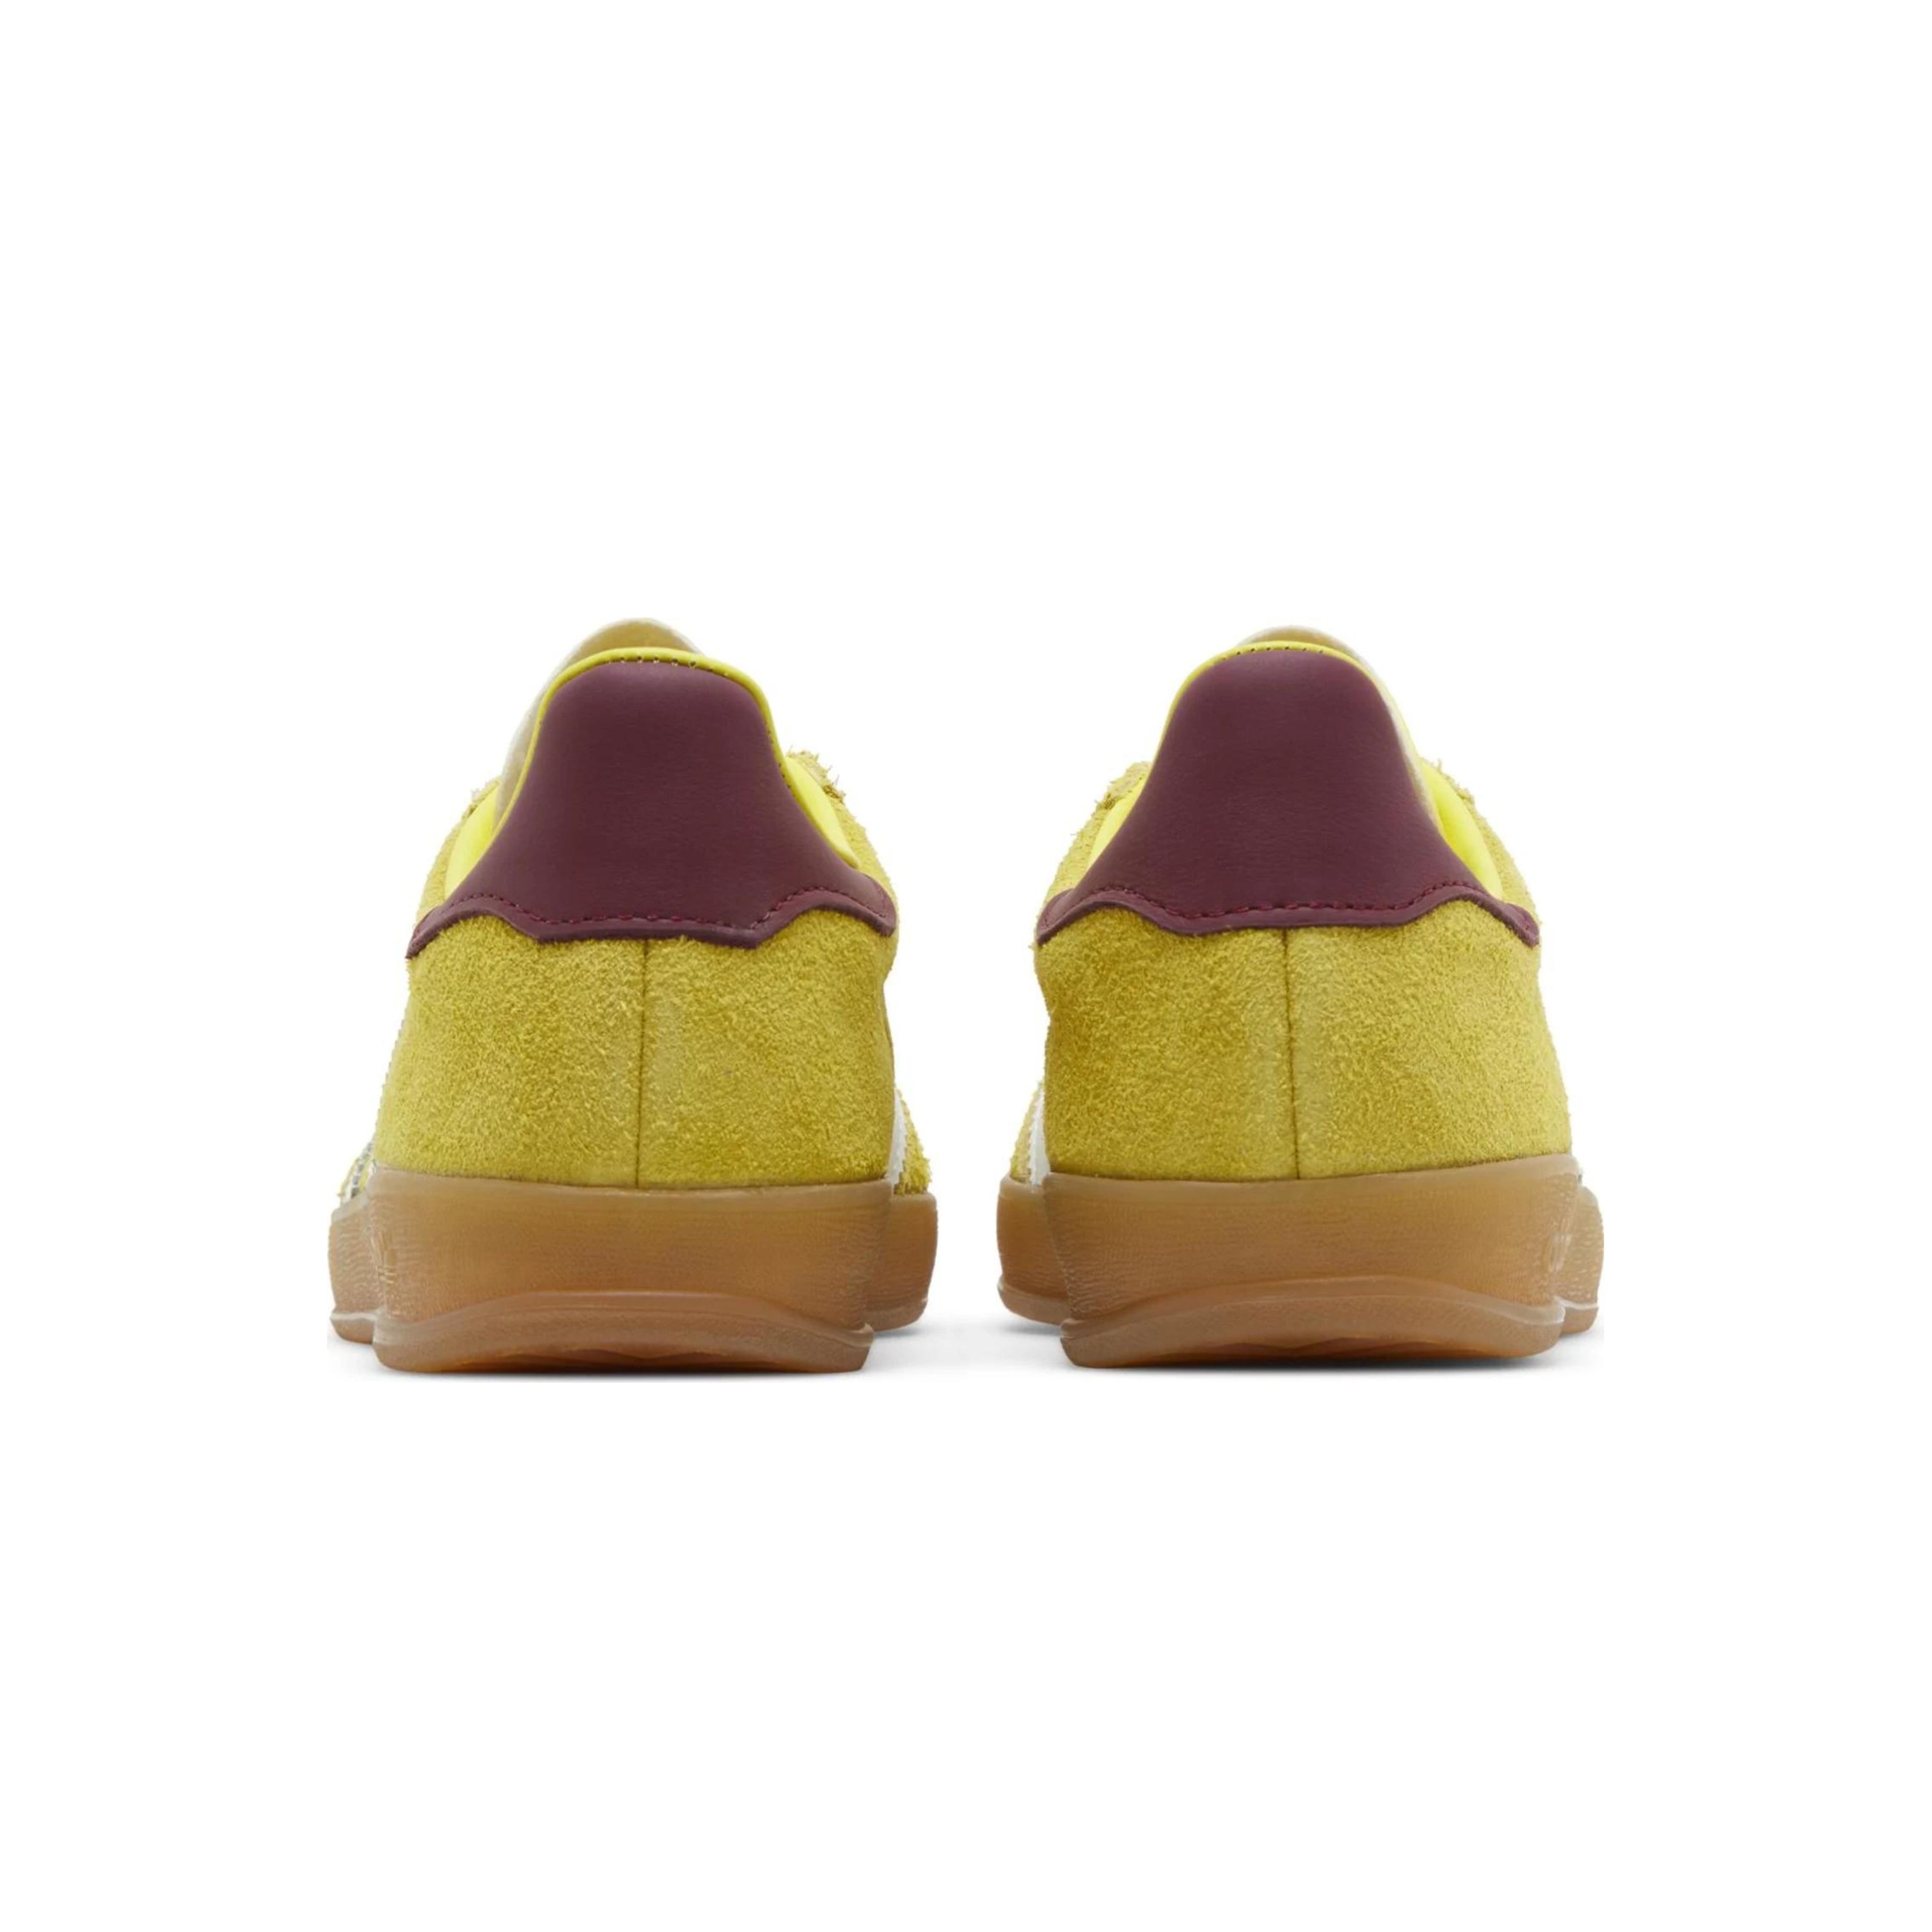 Adidas Gazelle Indoor Bright Yellow Collegiate Burgundy